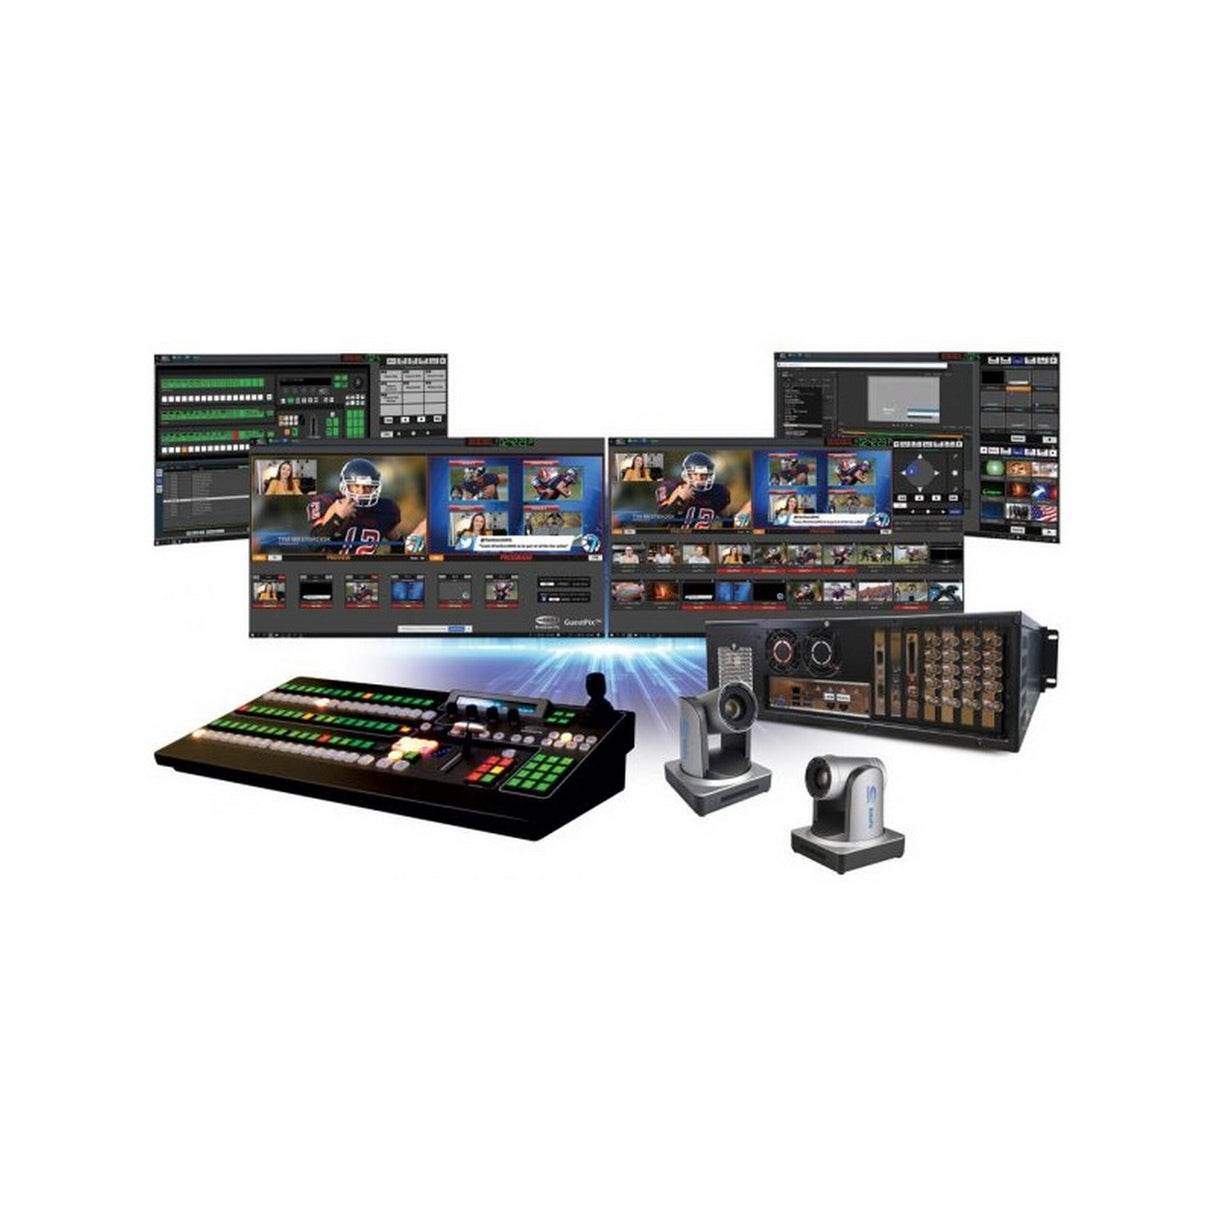 Broadcast Pix GX Hybrid 4K Ready System with Commander, Camera Control